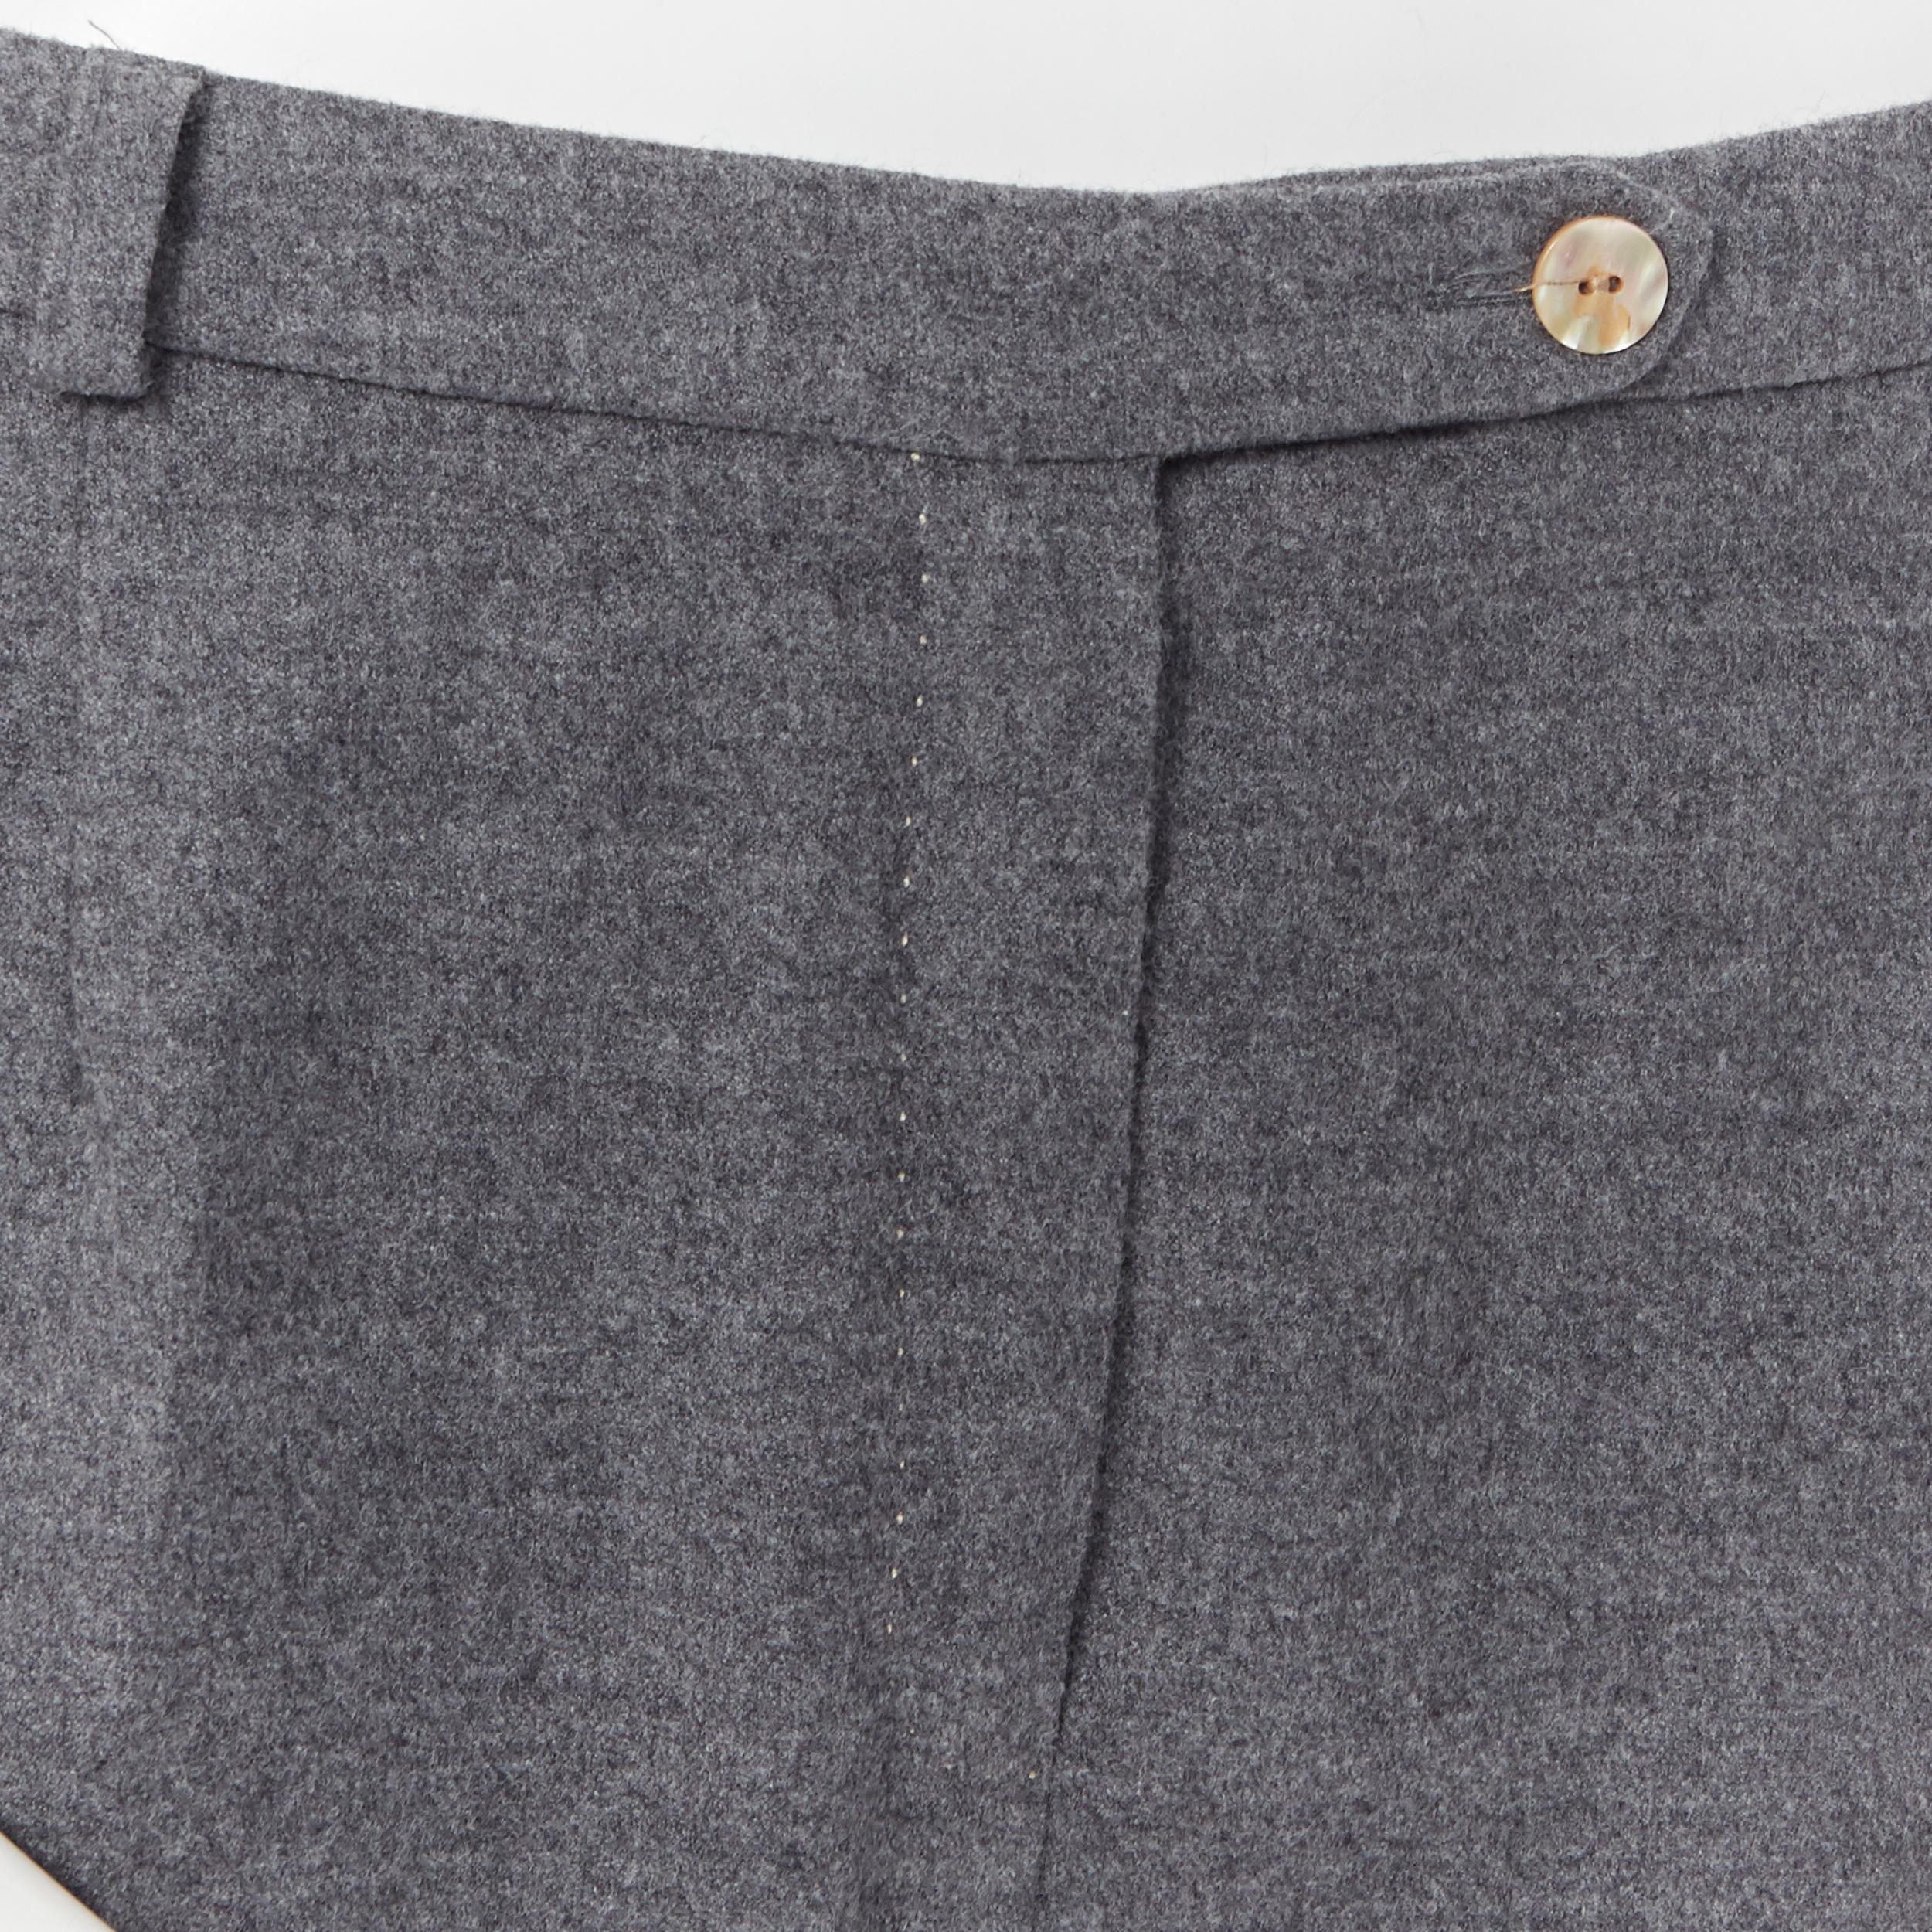 SPORTMAX grey virgin wool blend concealed front pocket wide leg pants US12 29